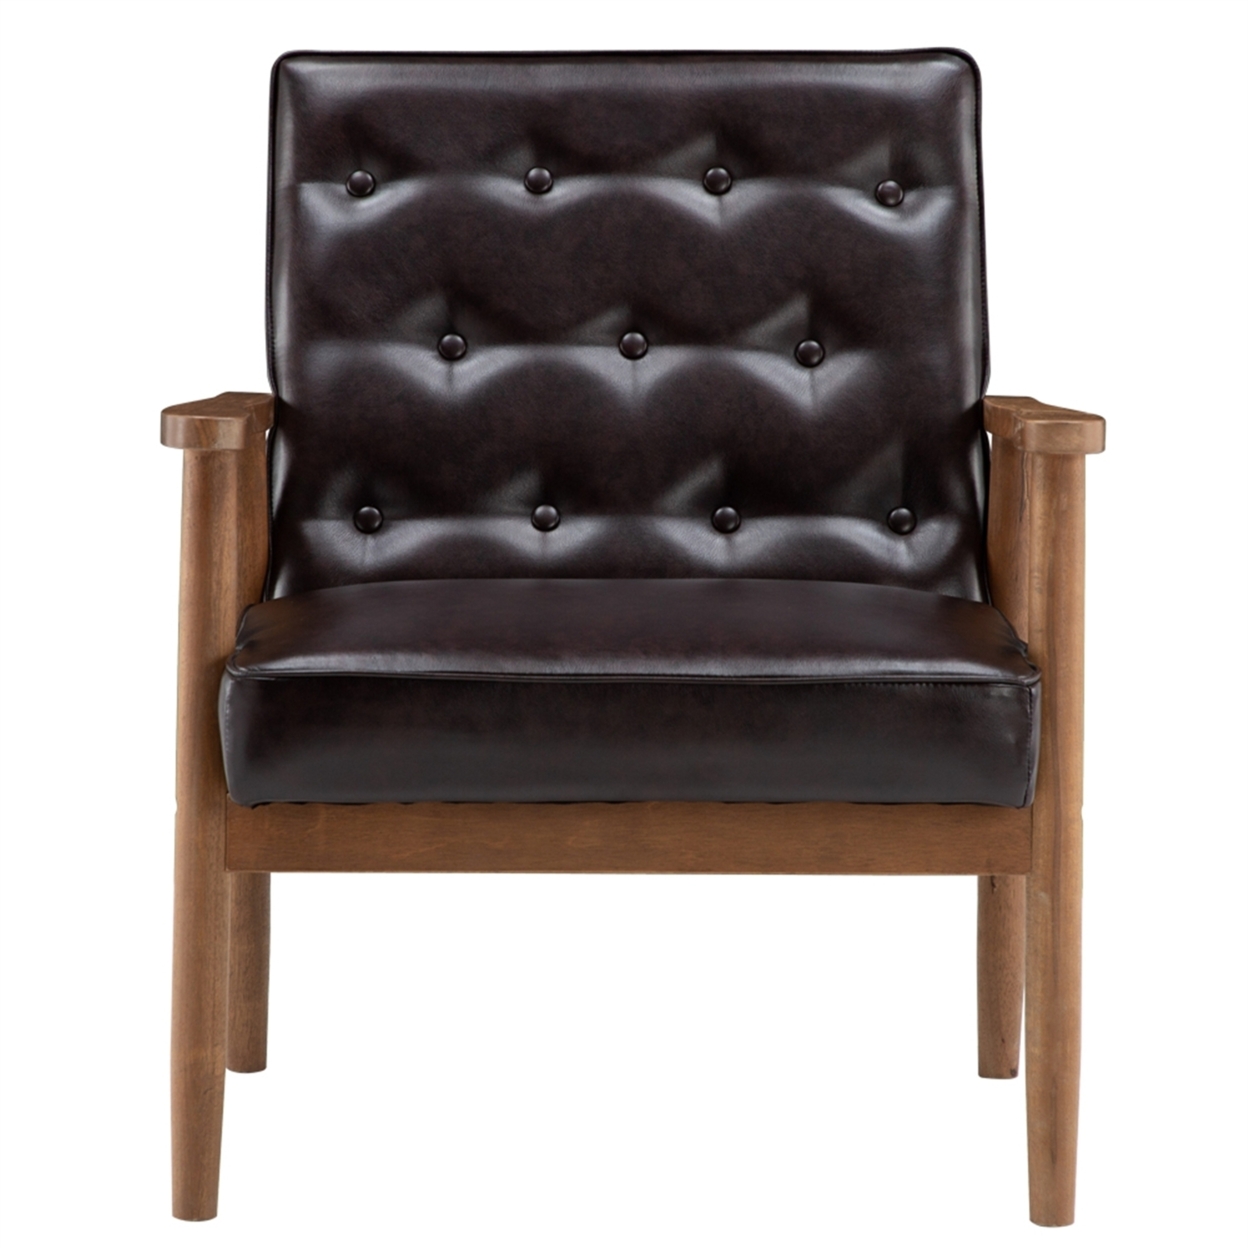 (75 x 69 x 84)cm Retro Modern Wooden Single Chair,Brown